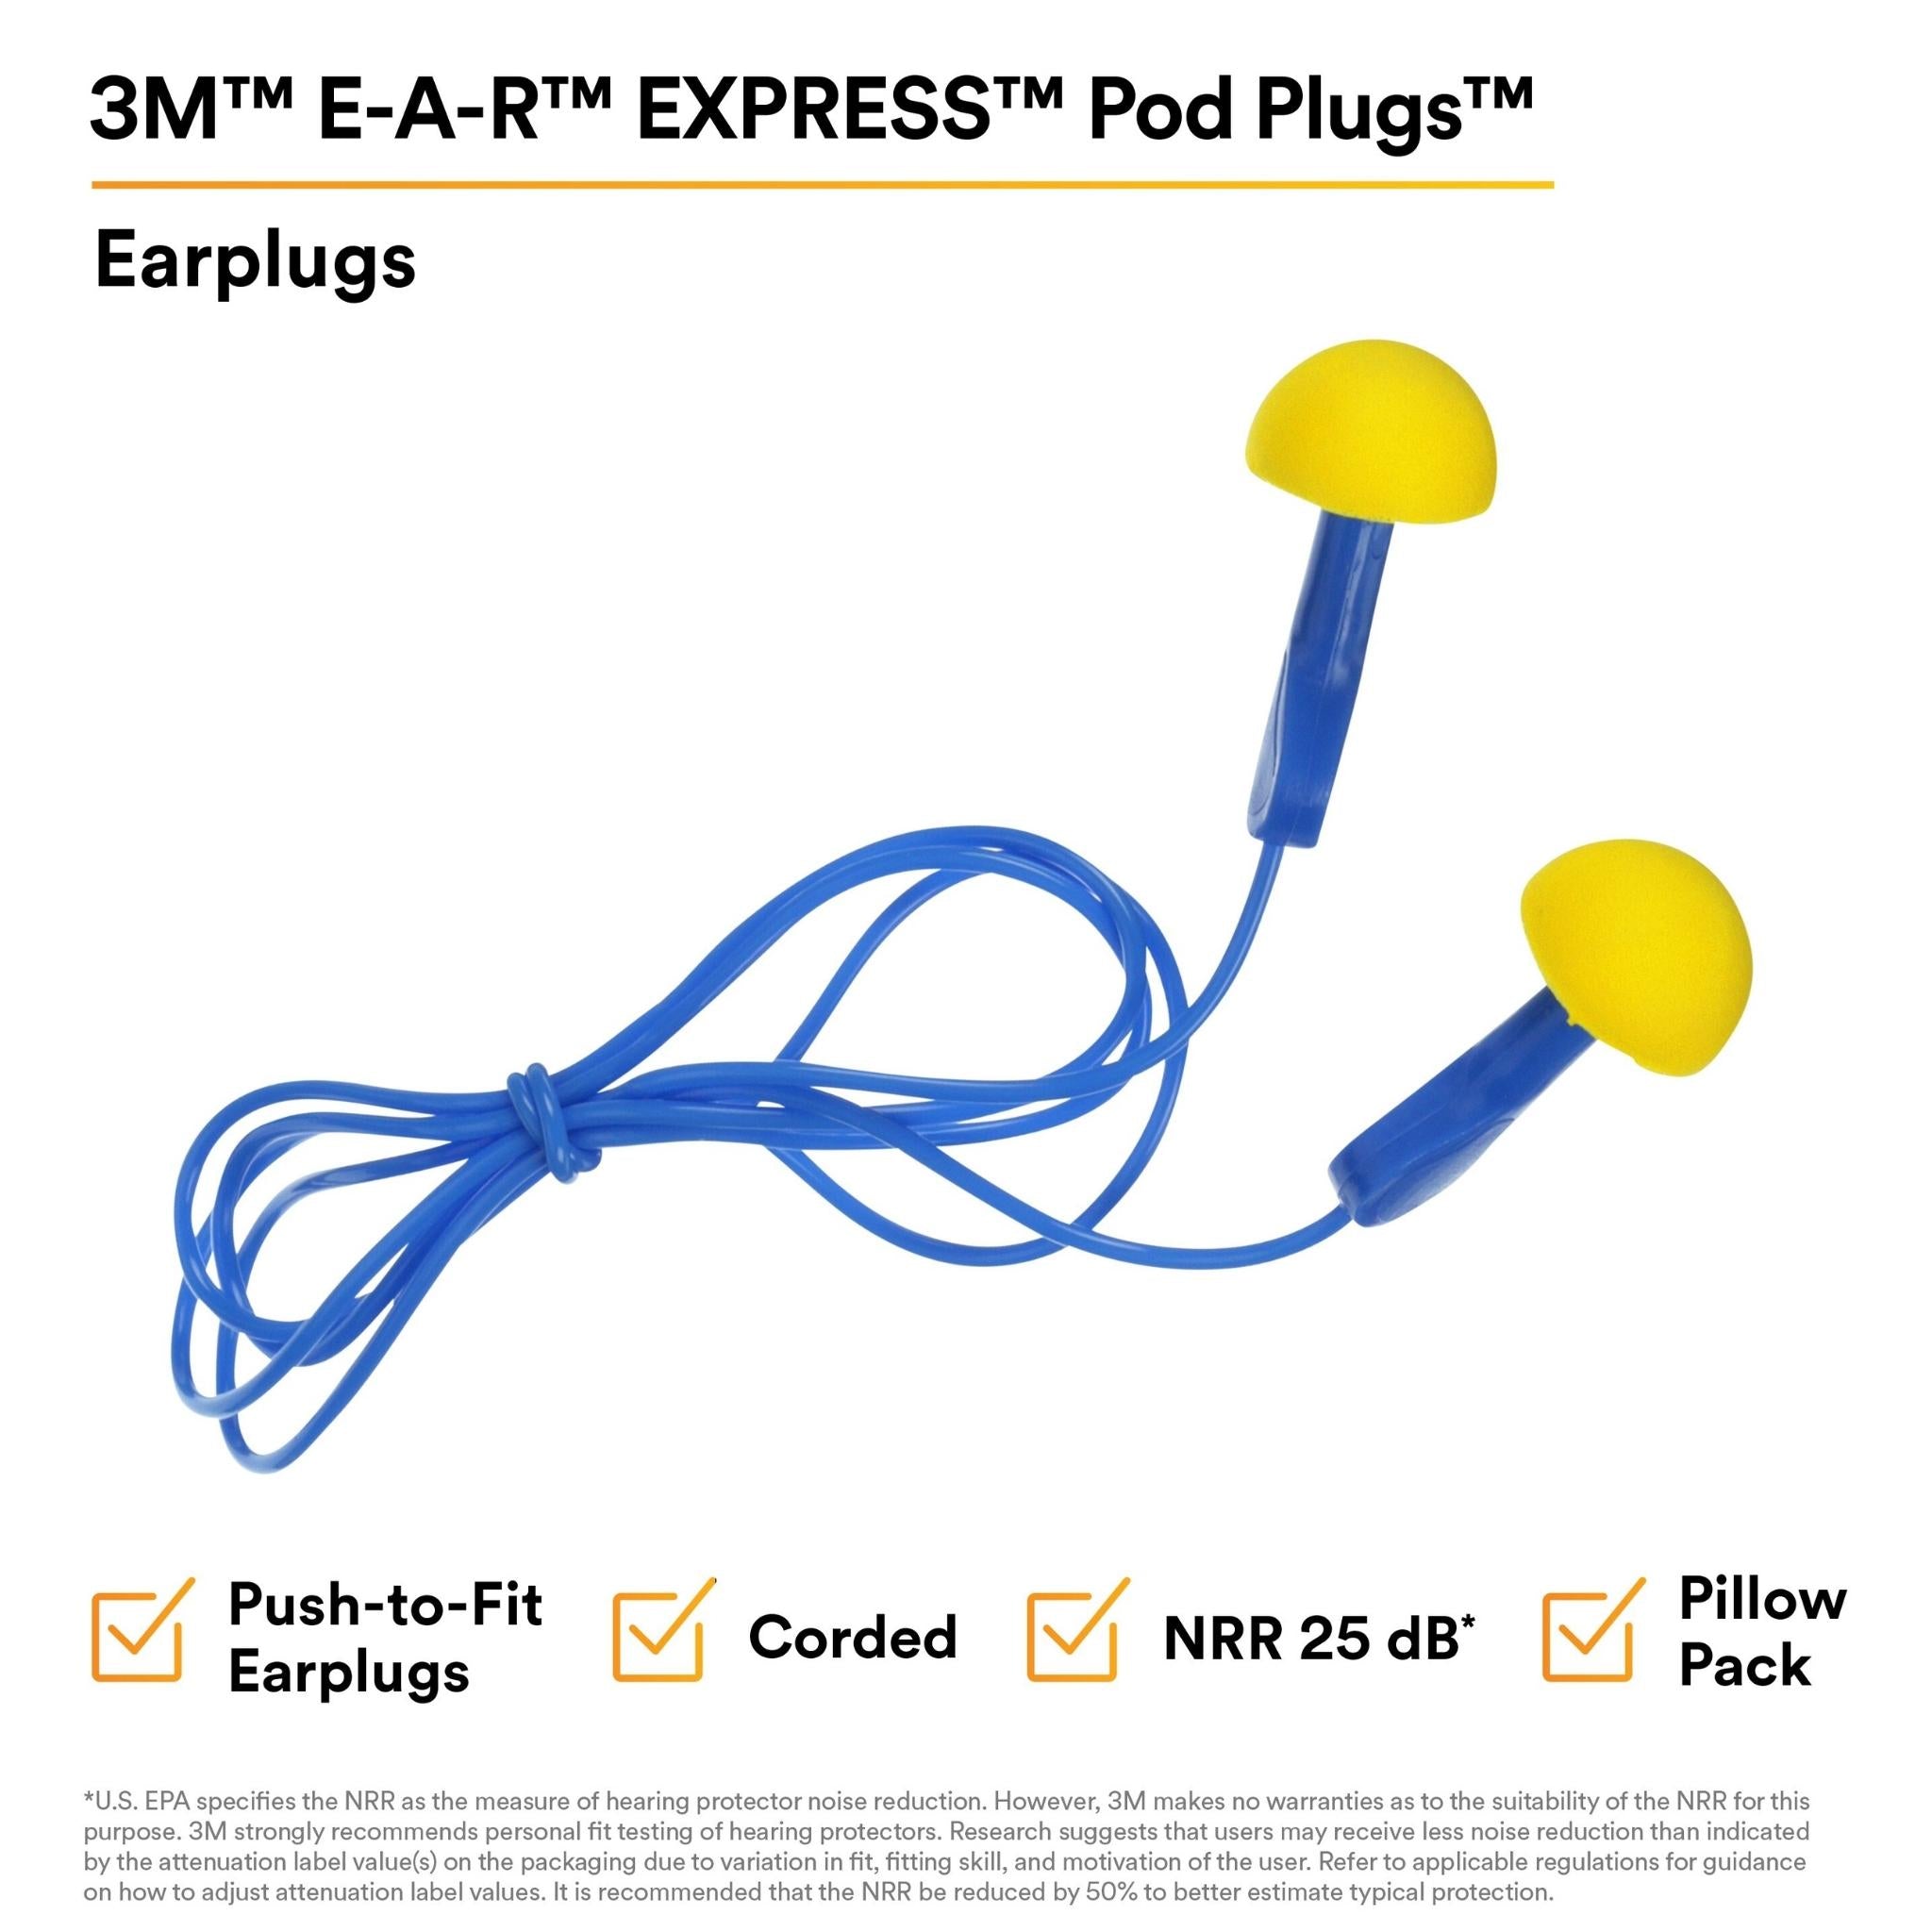 3M™ E-A-R™ EXPRESS™ Pod Plugs™ Earplugs 311-1114, Corded, Blue Grips, Pillow Pack